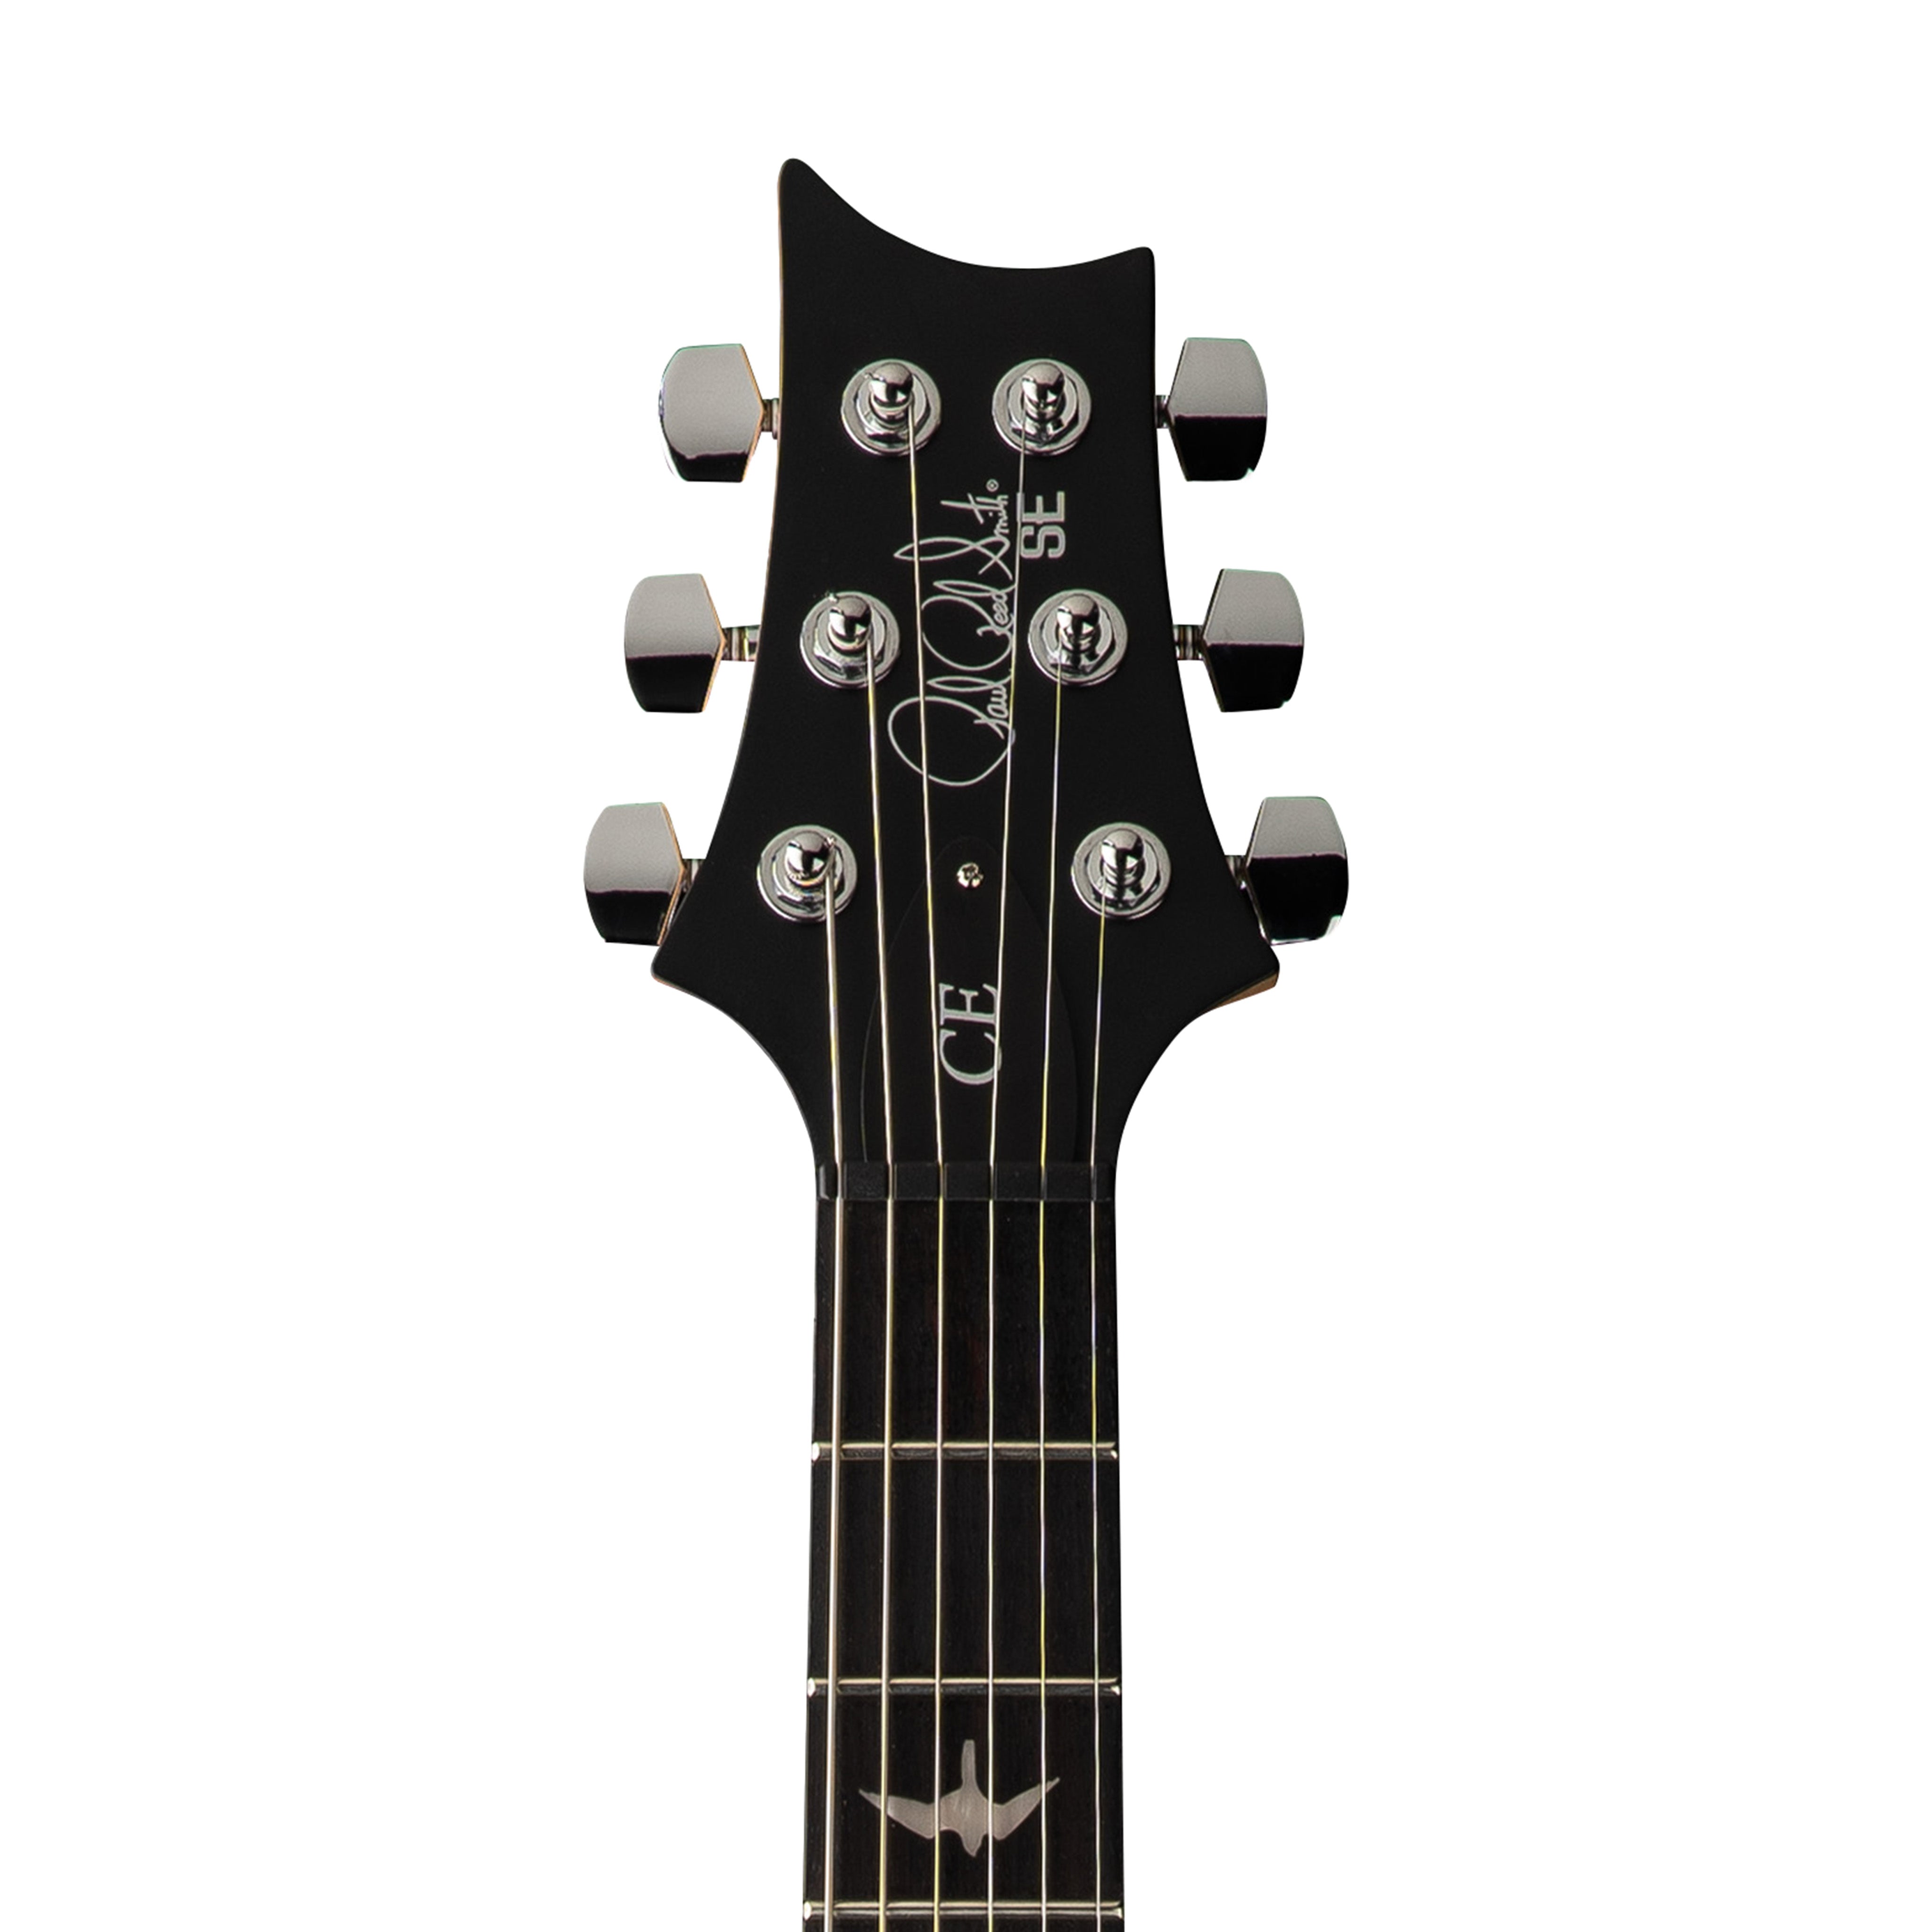 PRS SE CE24 Standard Satin Electric Guitar w/Bag, Charcoal